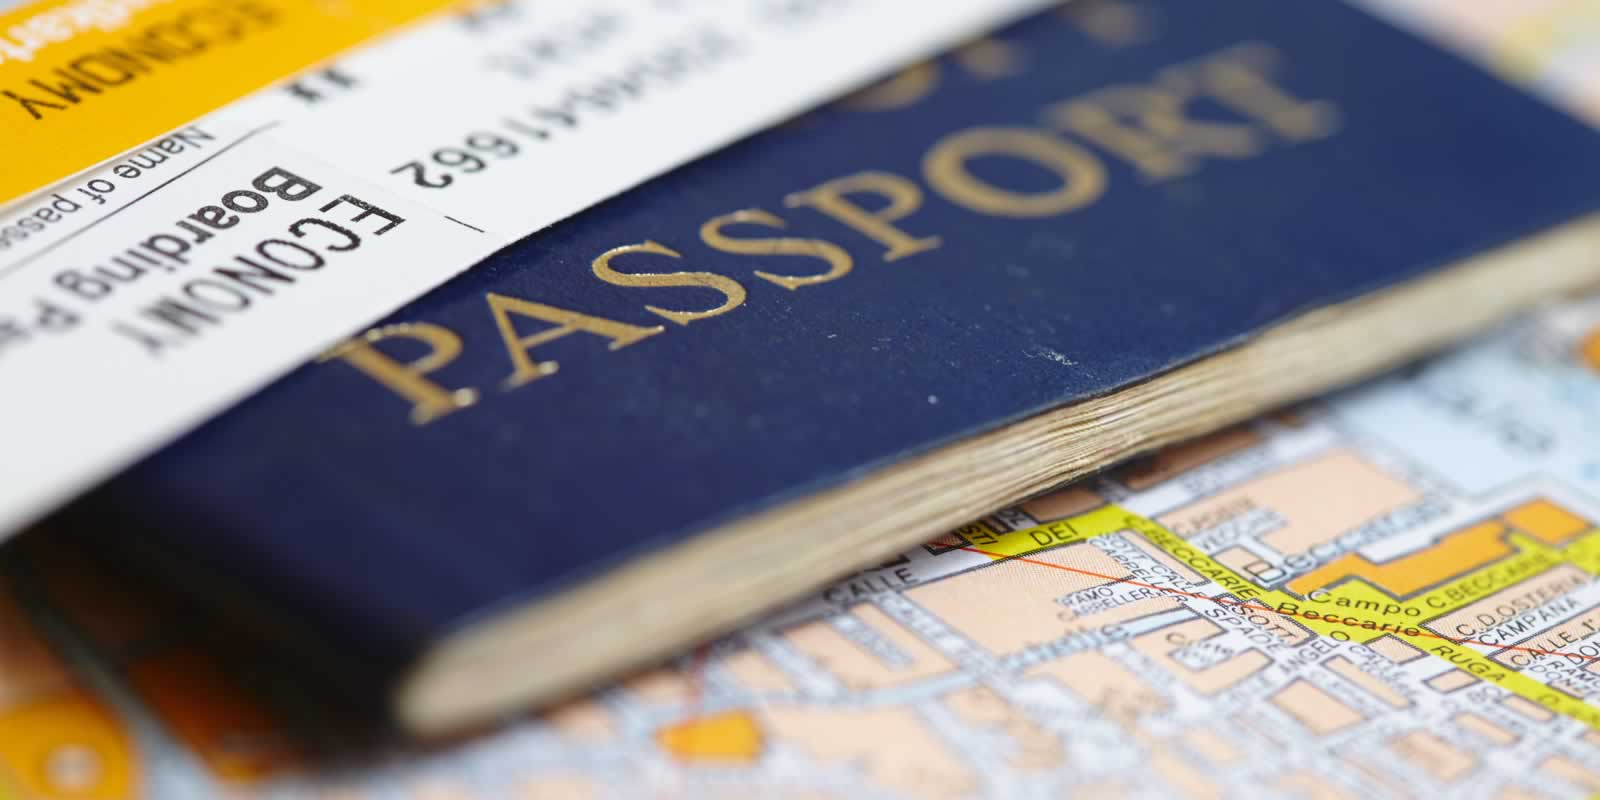 Passport and Visa Information